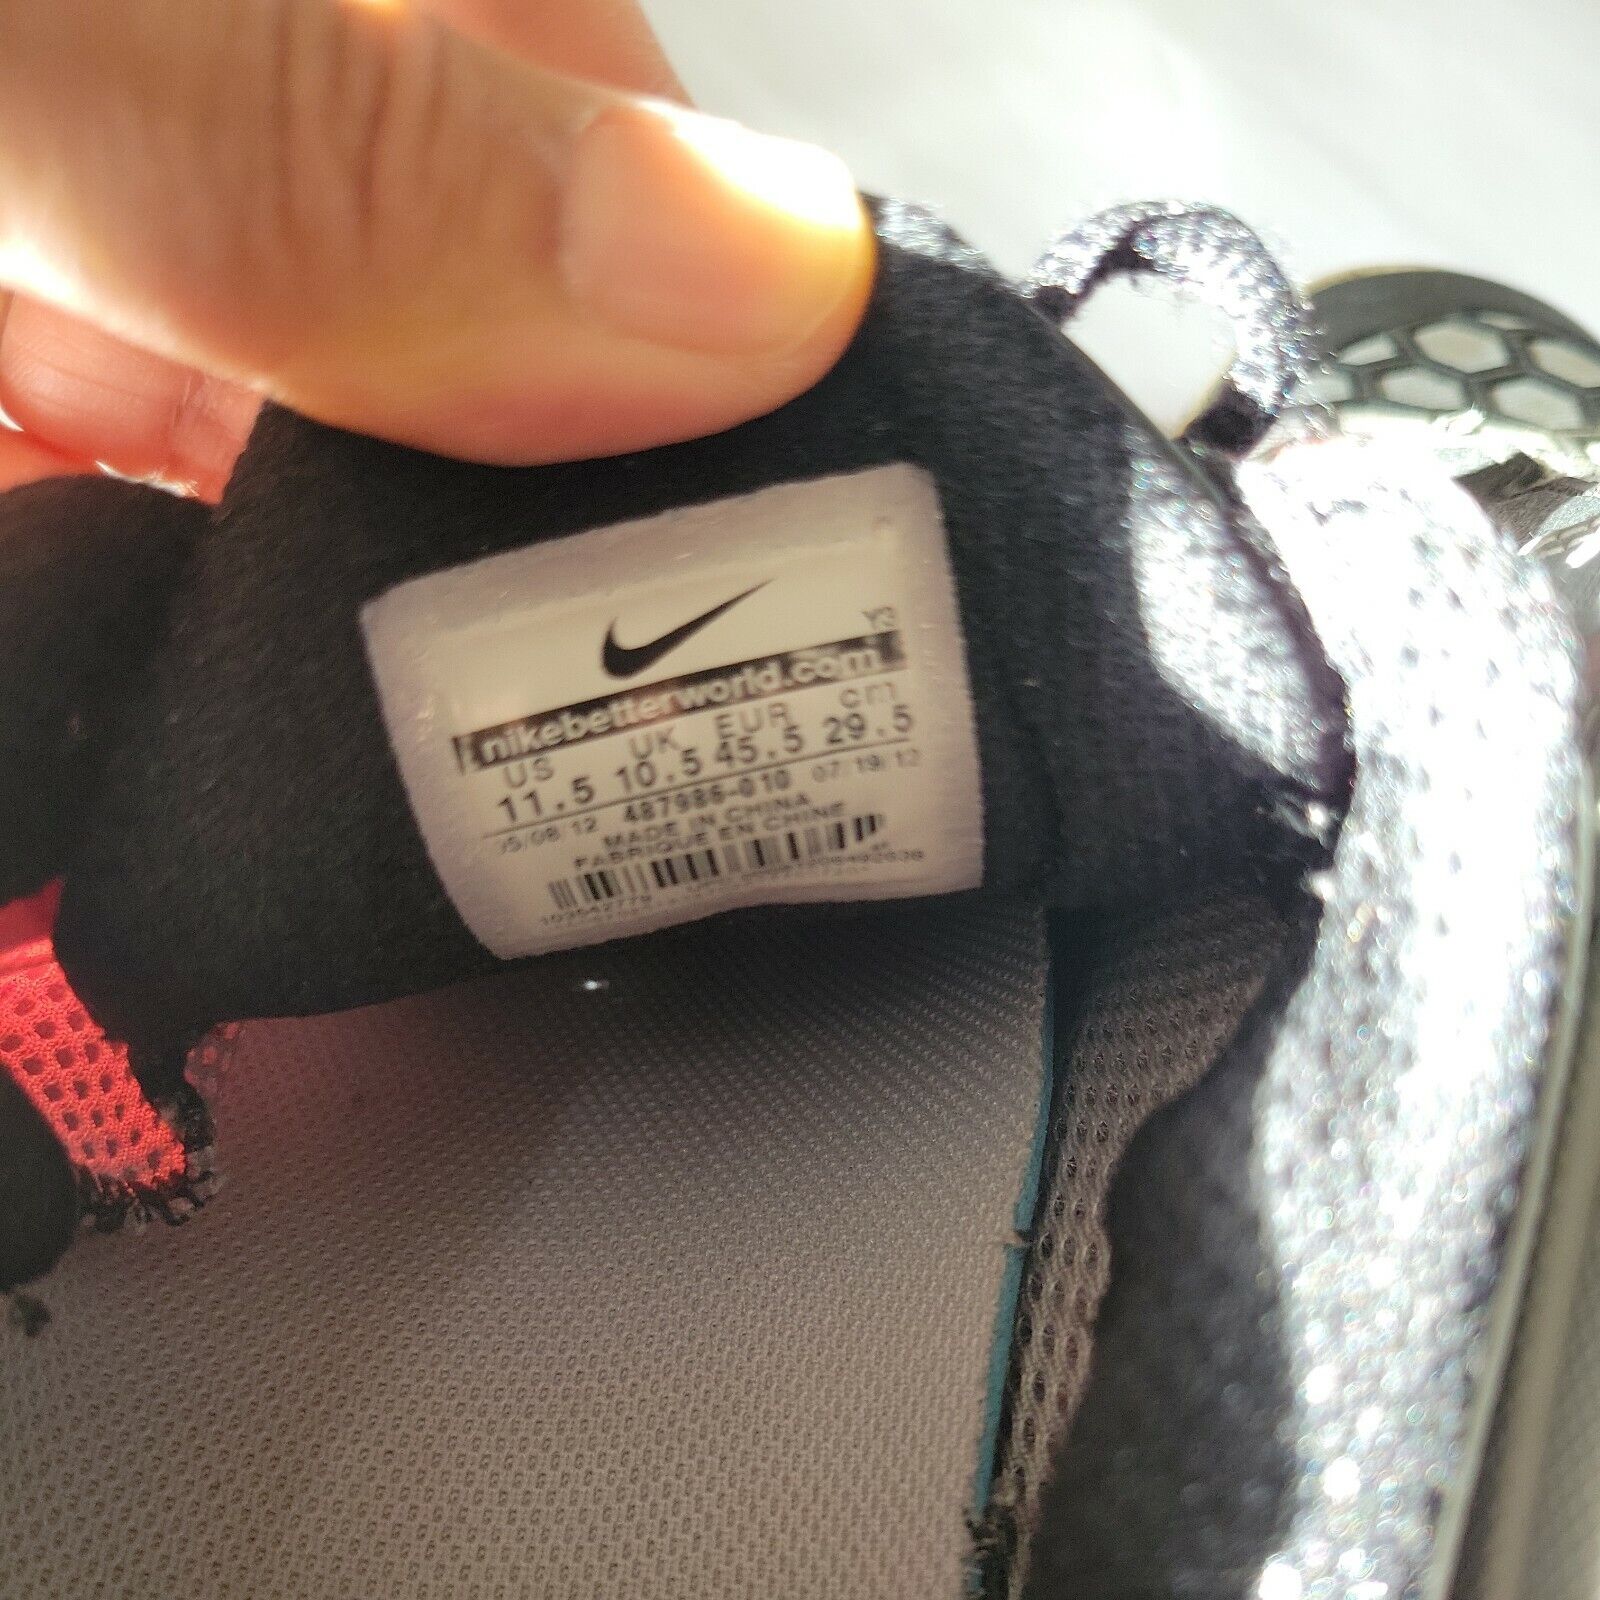 Nike Hyperdunk 2012 Mens Size 11.5 Black Shoes Sneakers Basketball 524934-004